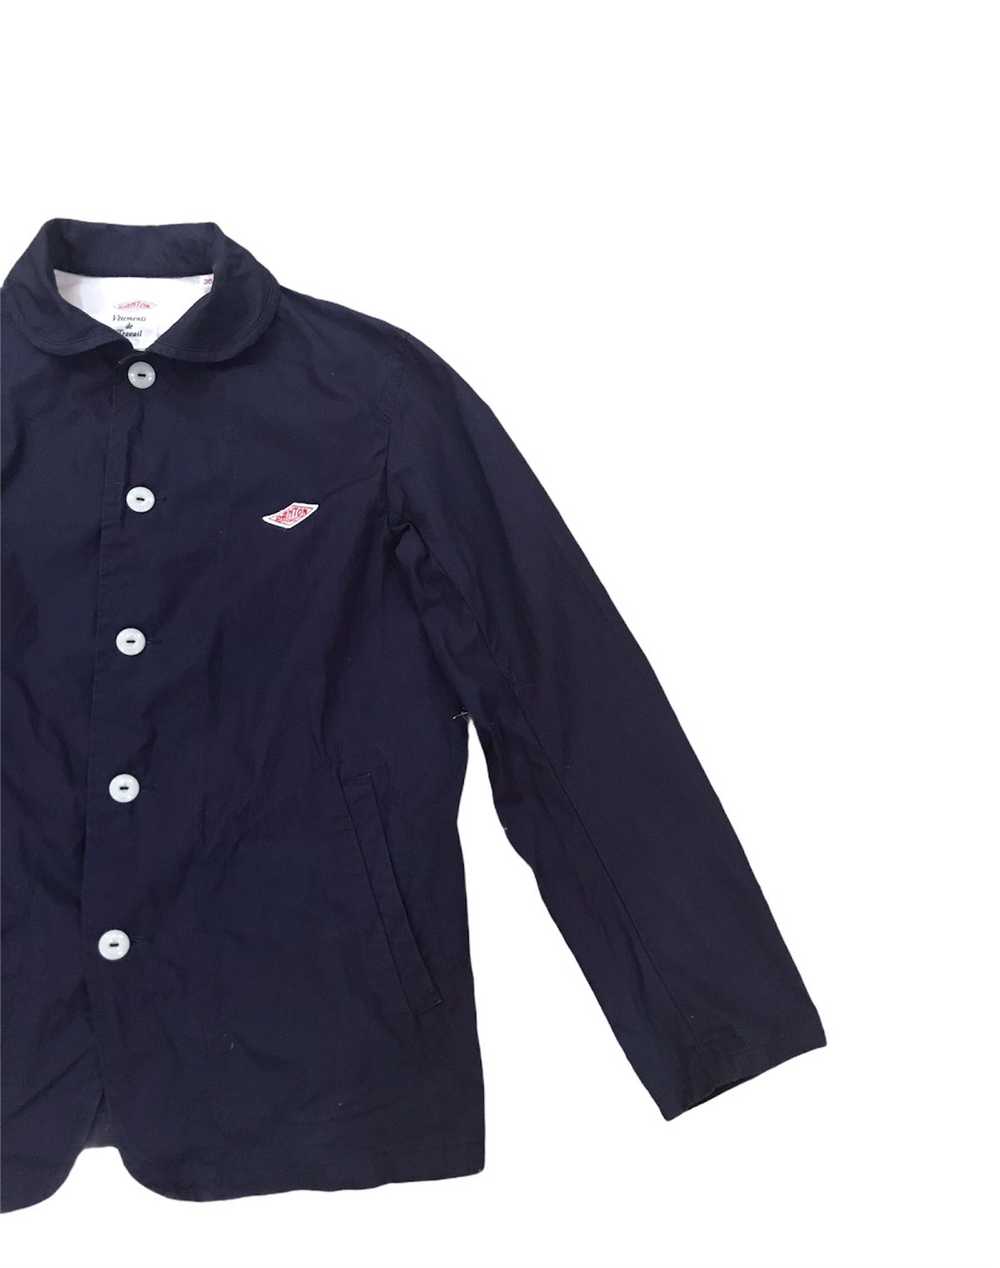 Danton Danton jacket size 36 made in Japan - image 3